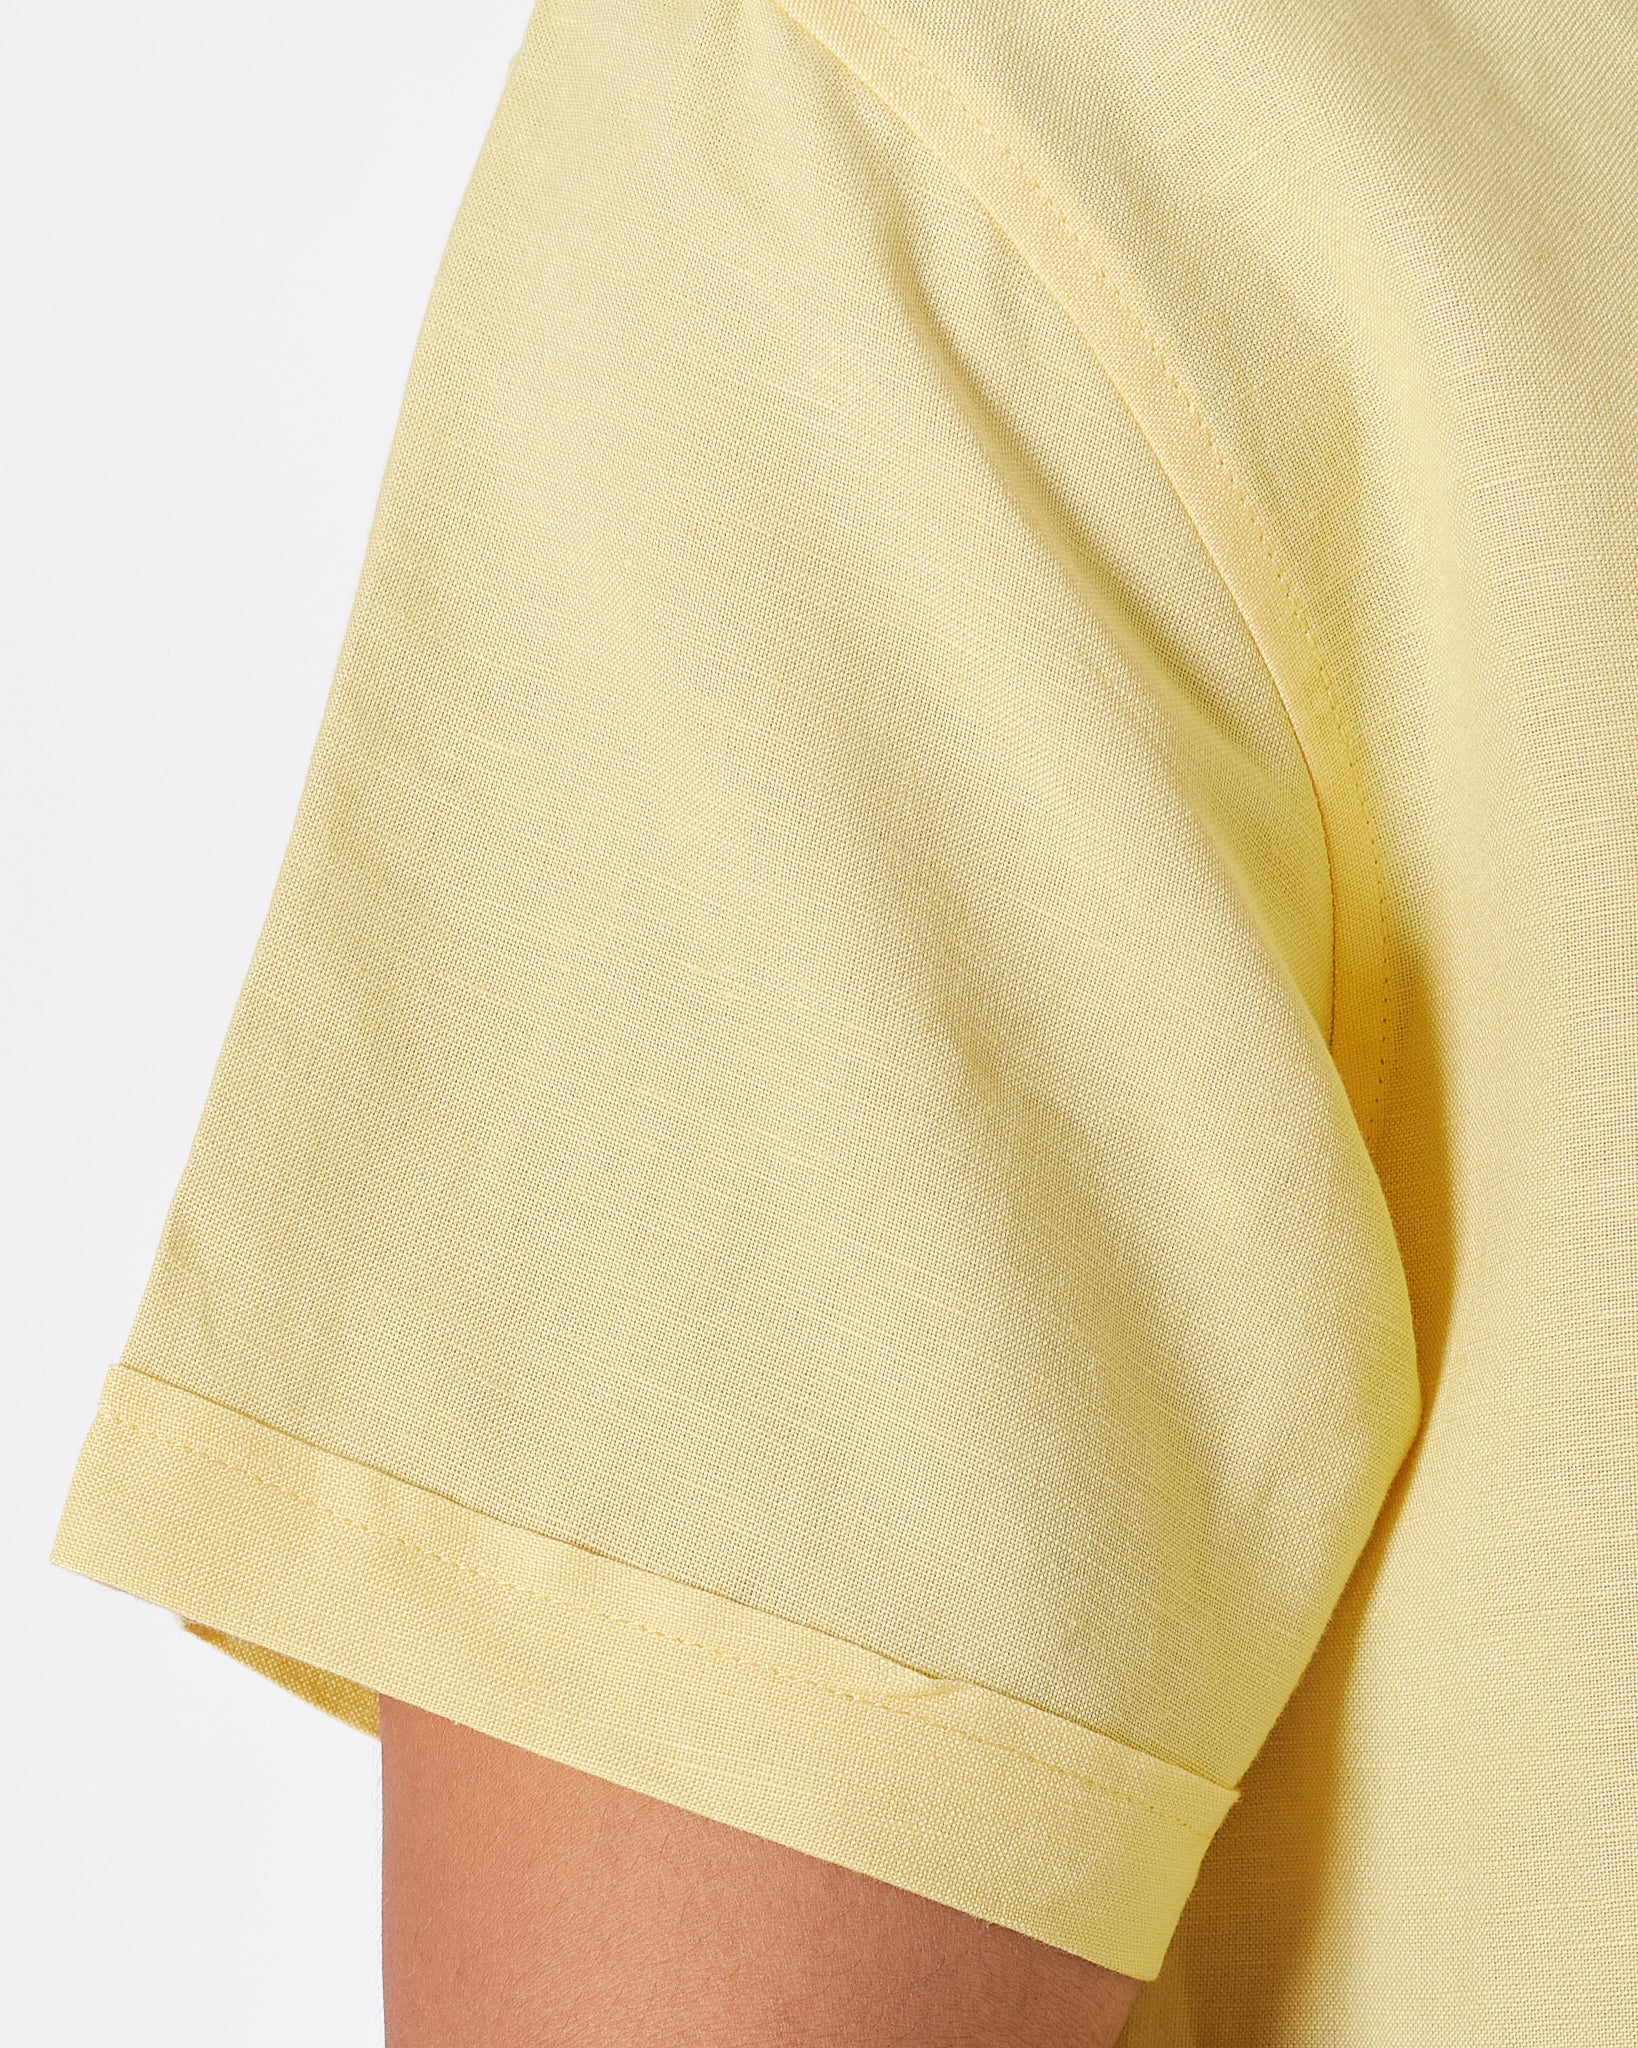 RL Cotton Men Yellow Shirts Short Sleeve 28.90